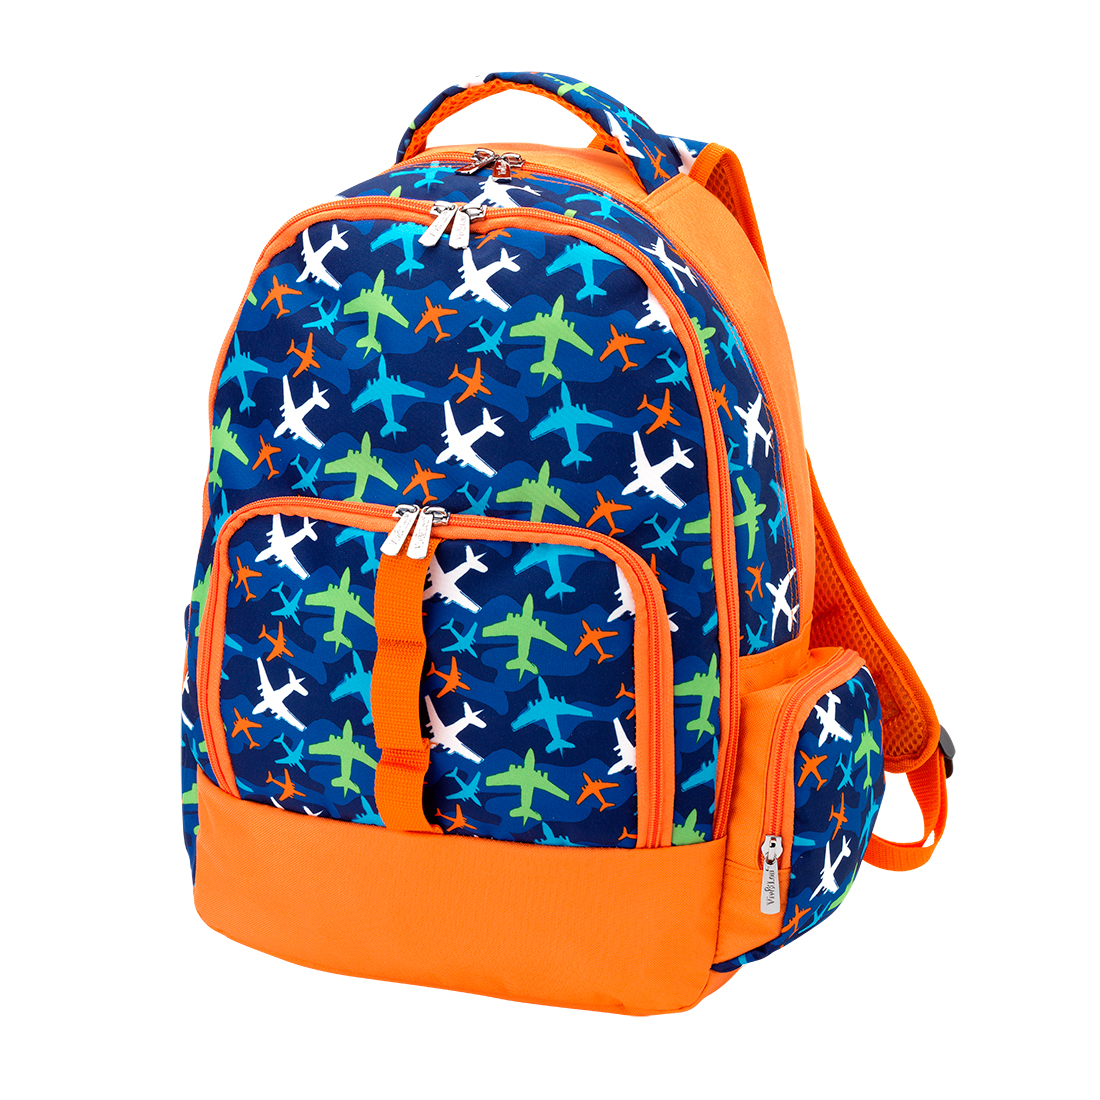 Personalized Backpacks for Boys | Monogram Backpack for Kids